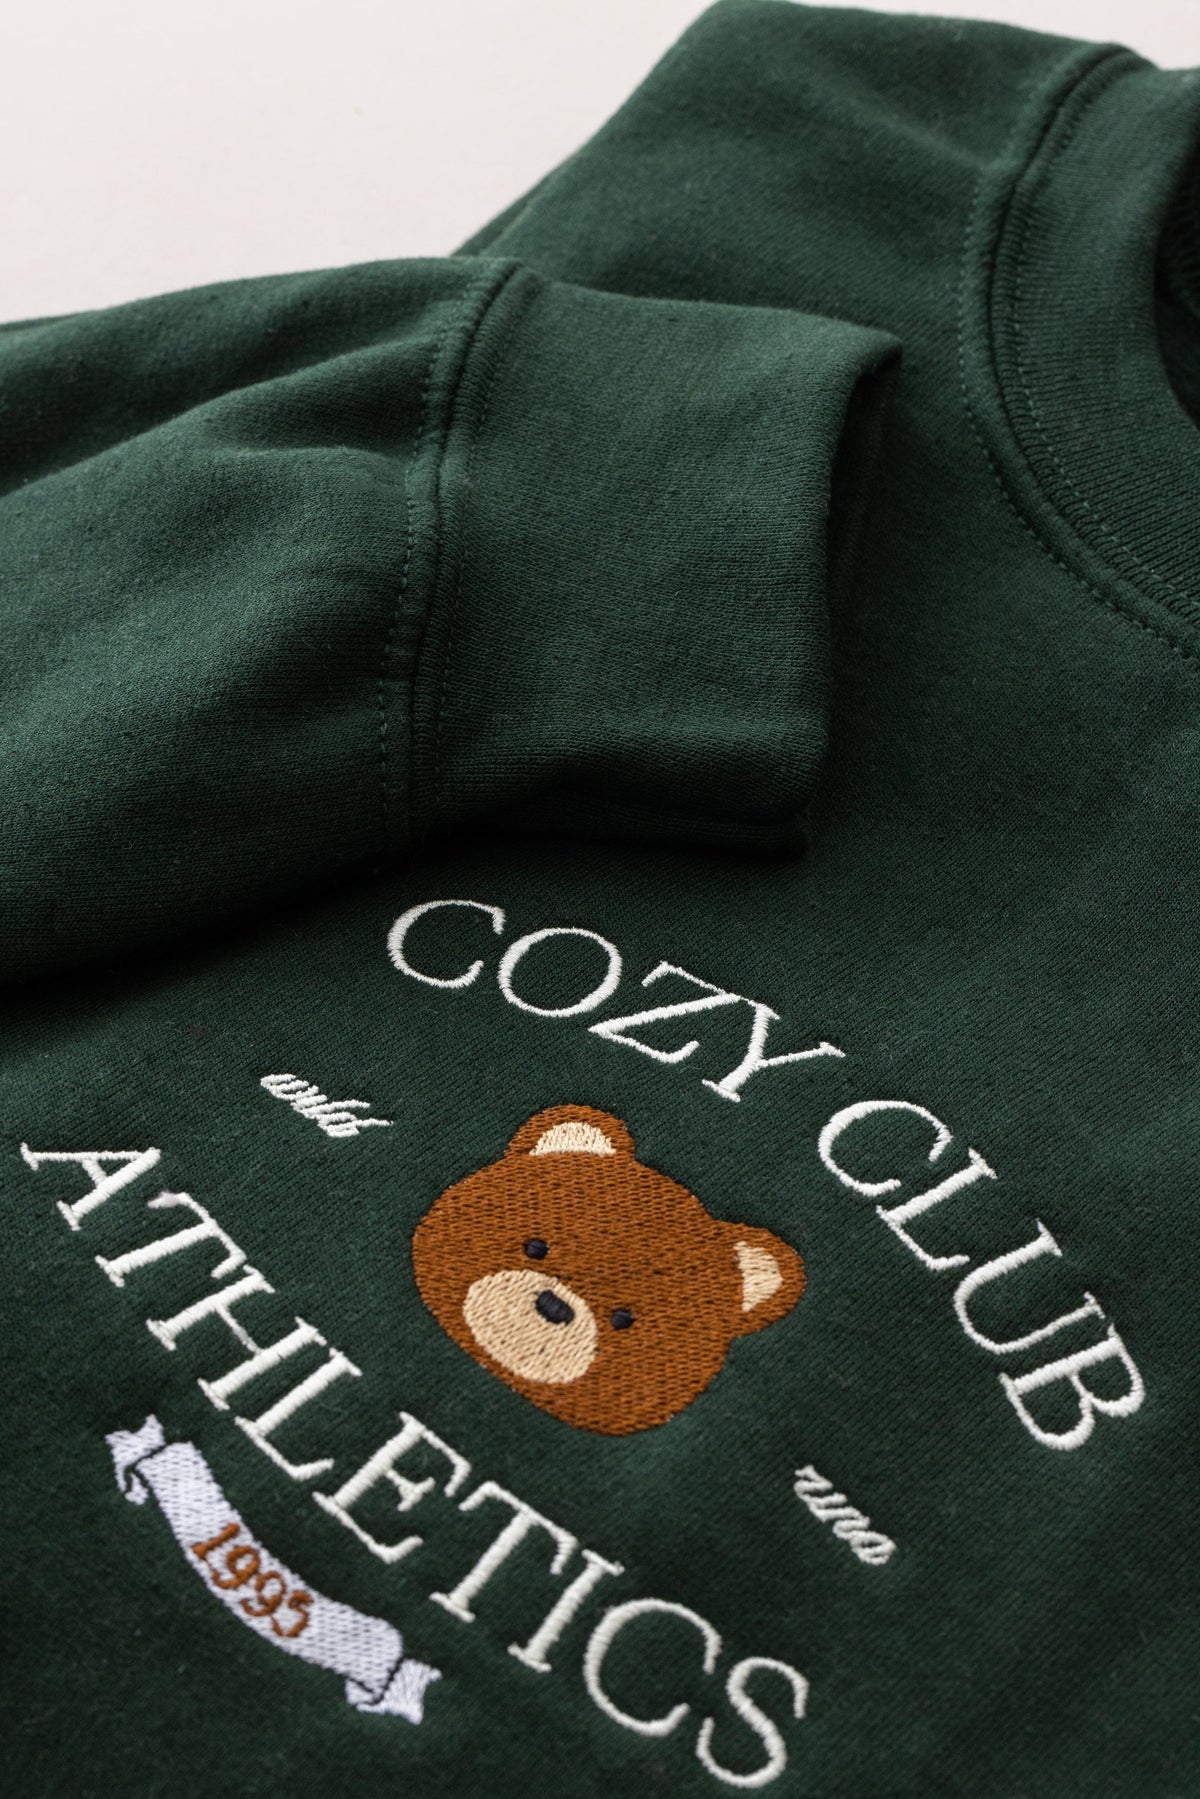 Cozy Club Athletic Crewneck Sweater